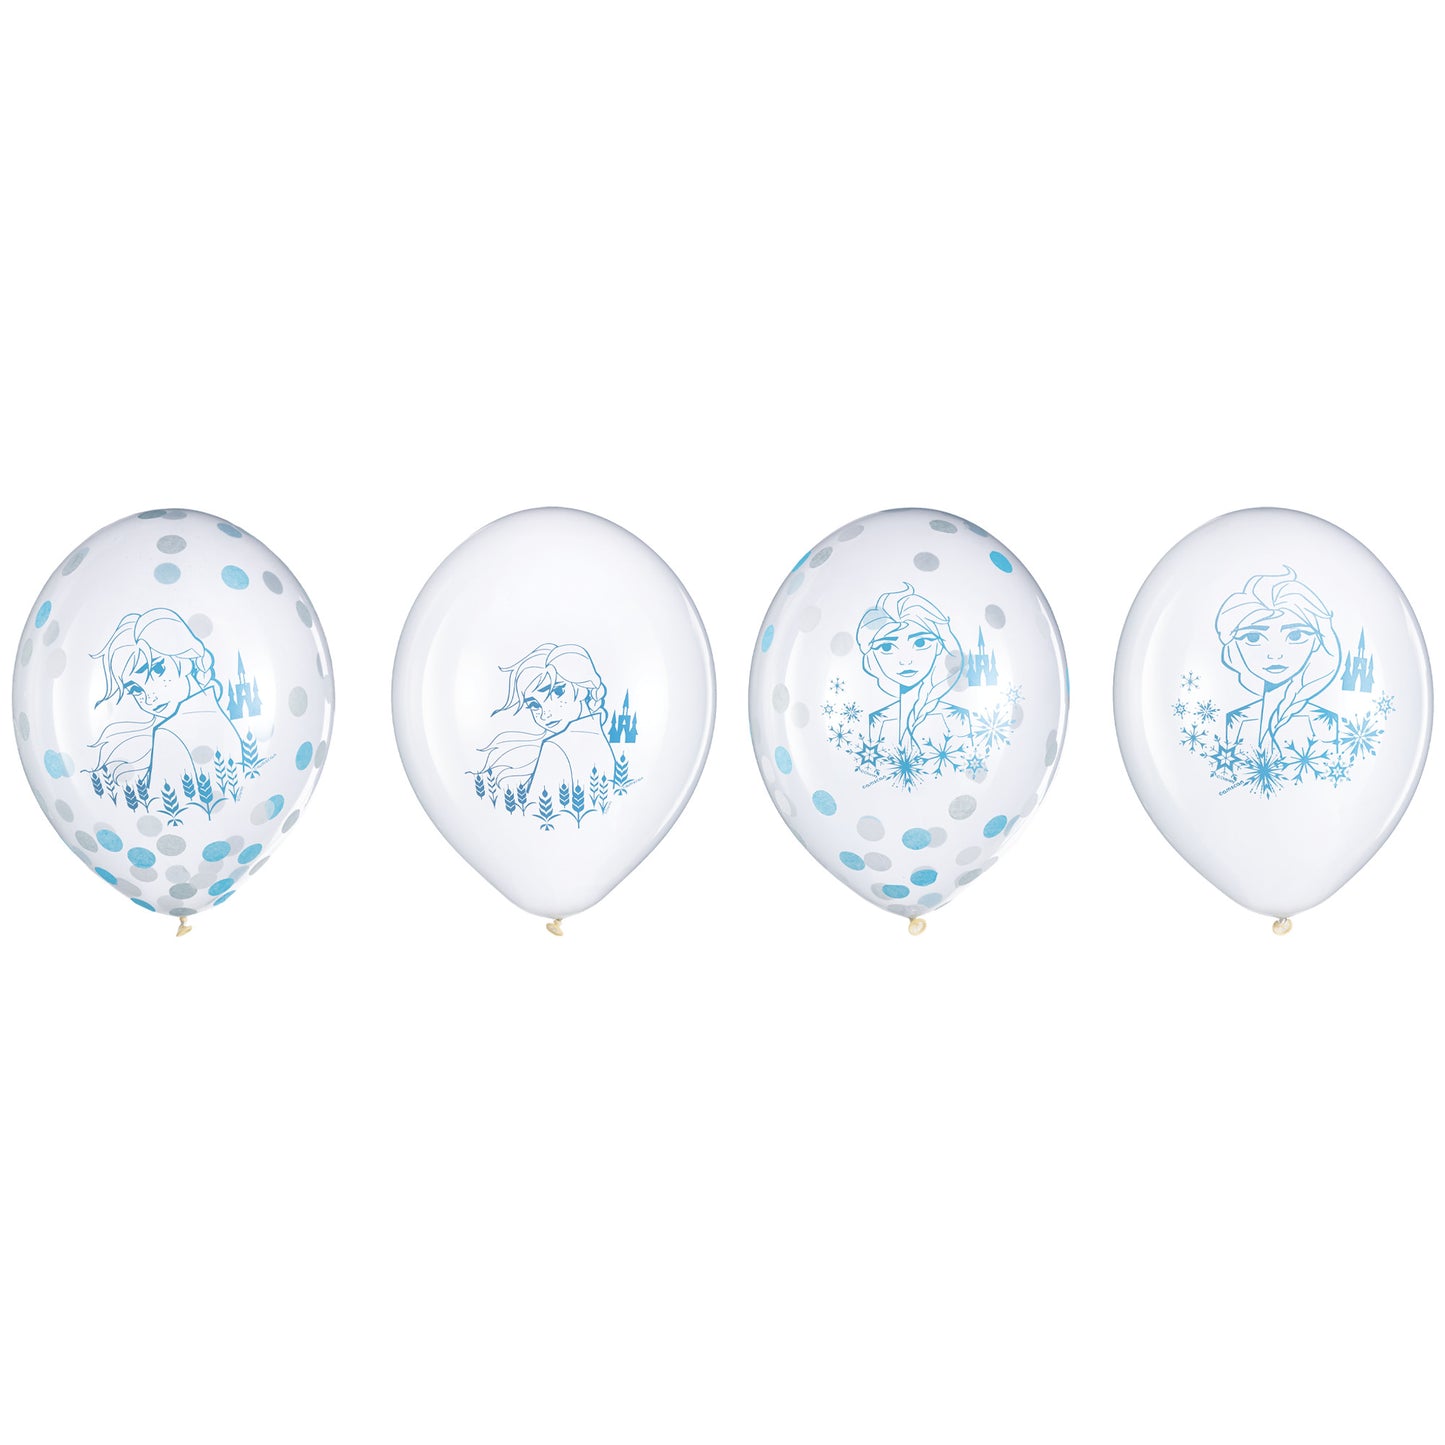 Disney Frozen 2 12" Confetti Latex Balloons, 6-pc